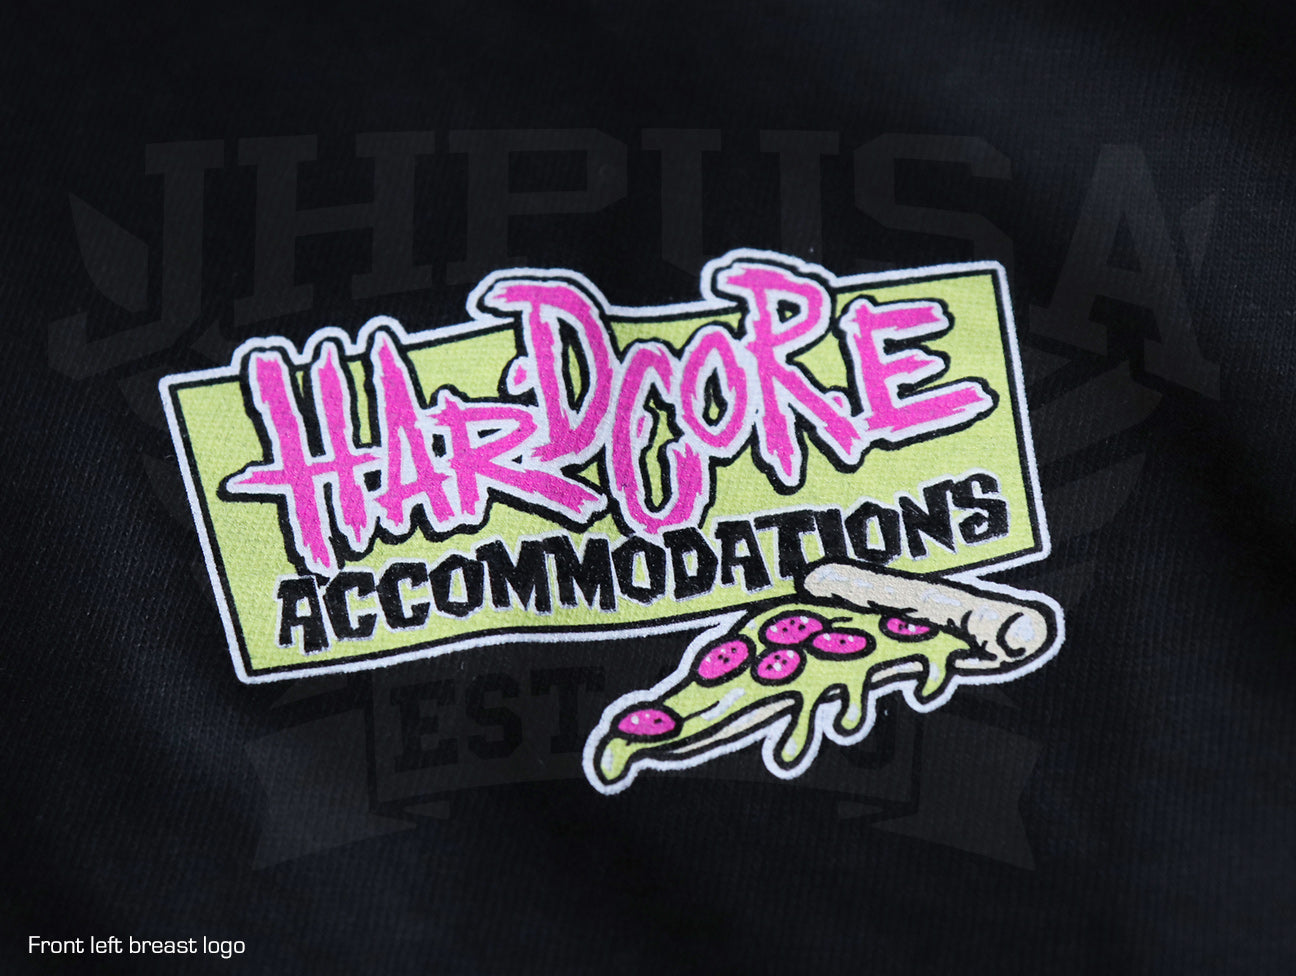 Thrilla Krew Hardcoare Accommodations Tee - Black